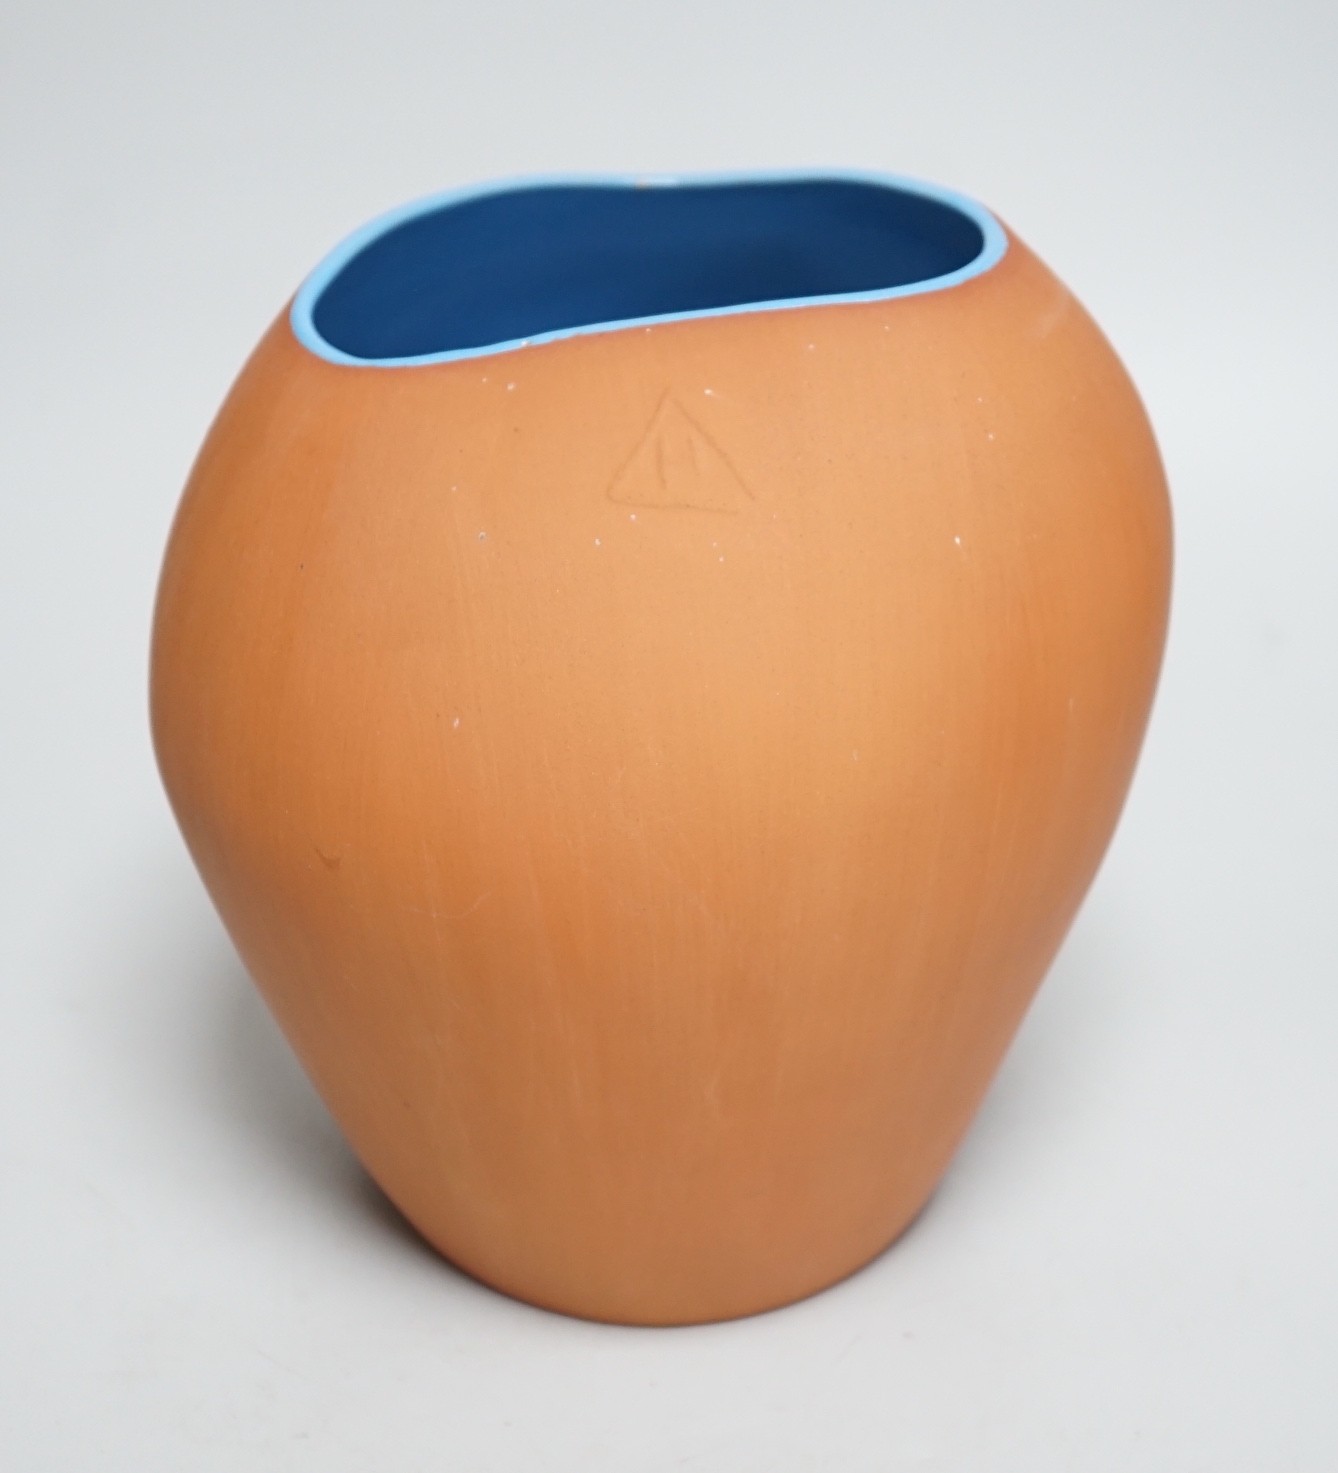 Heather McCartney, a pottery tulip vase, 21cm